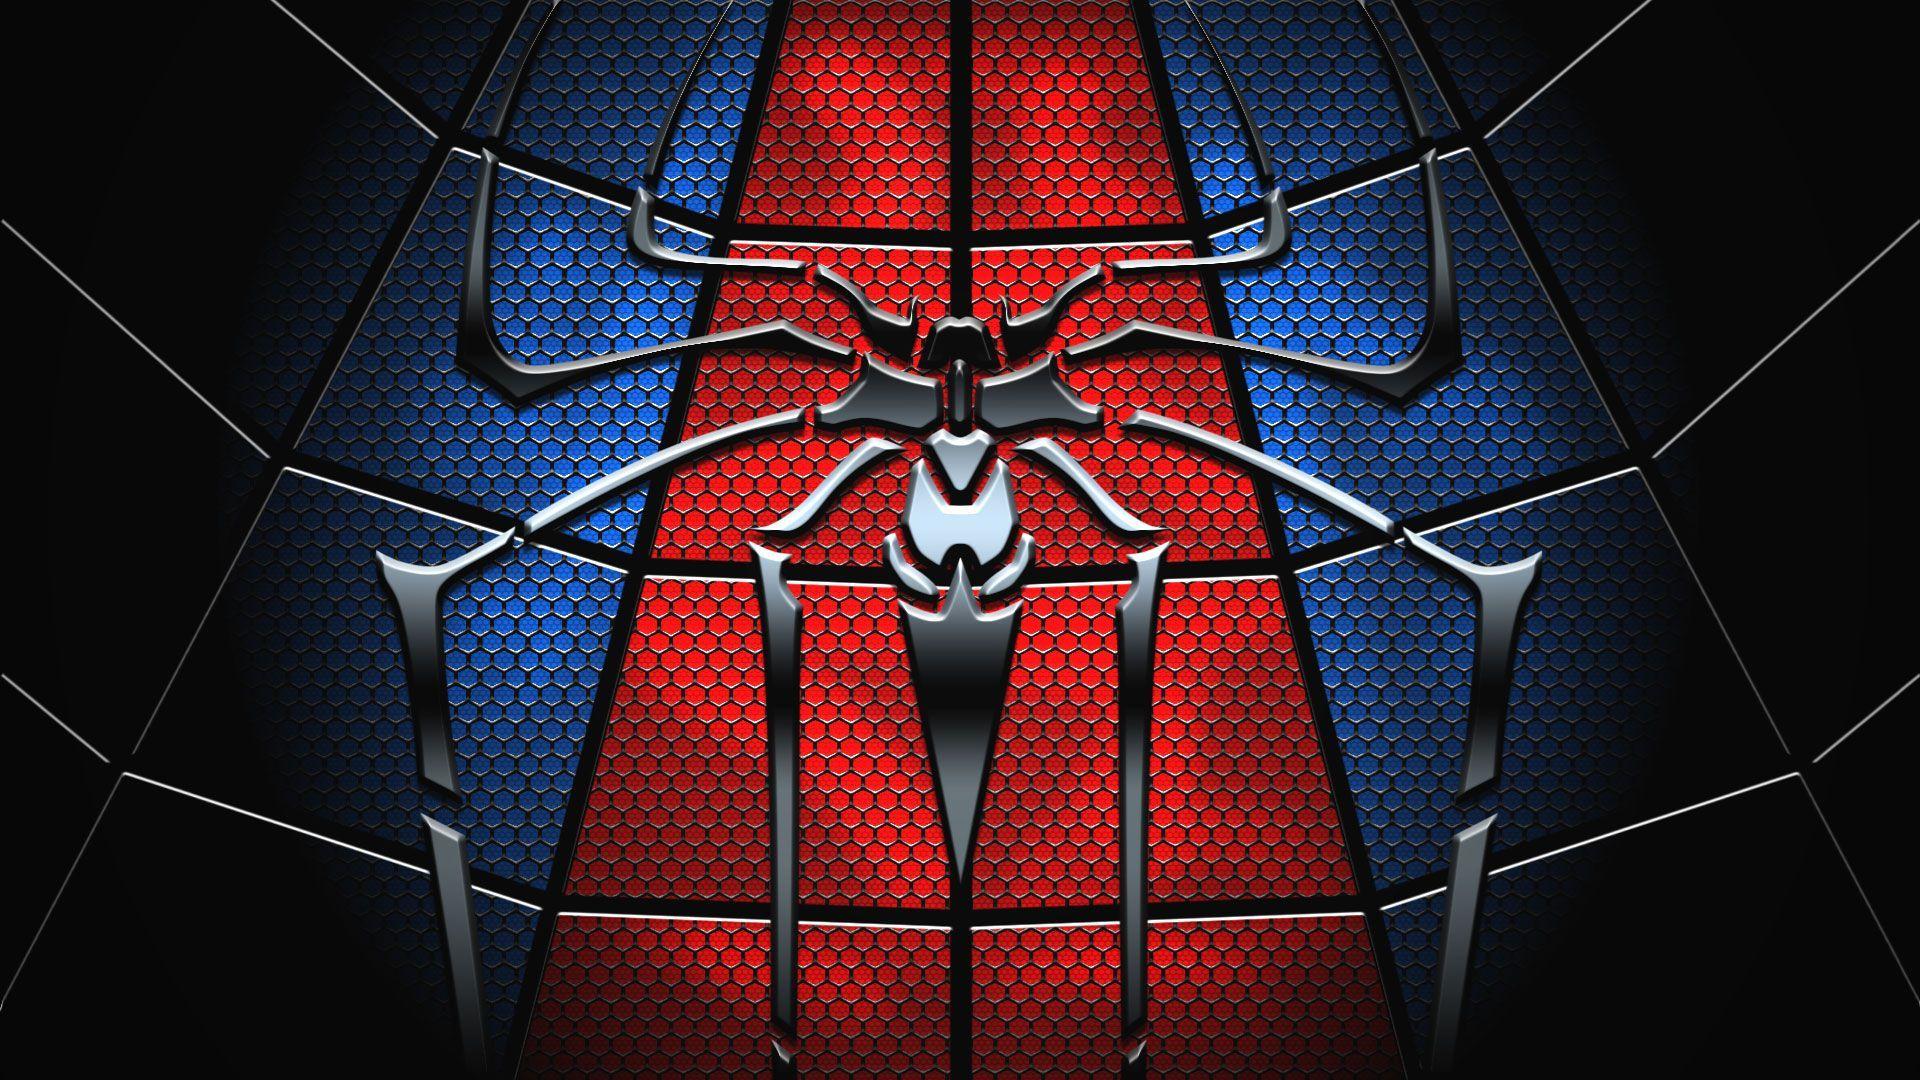 Spiderman symbol. David's